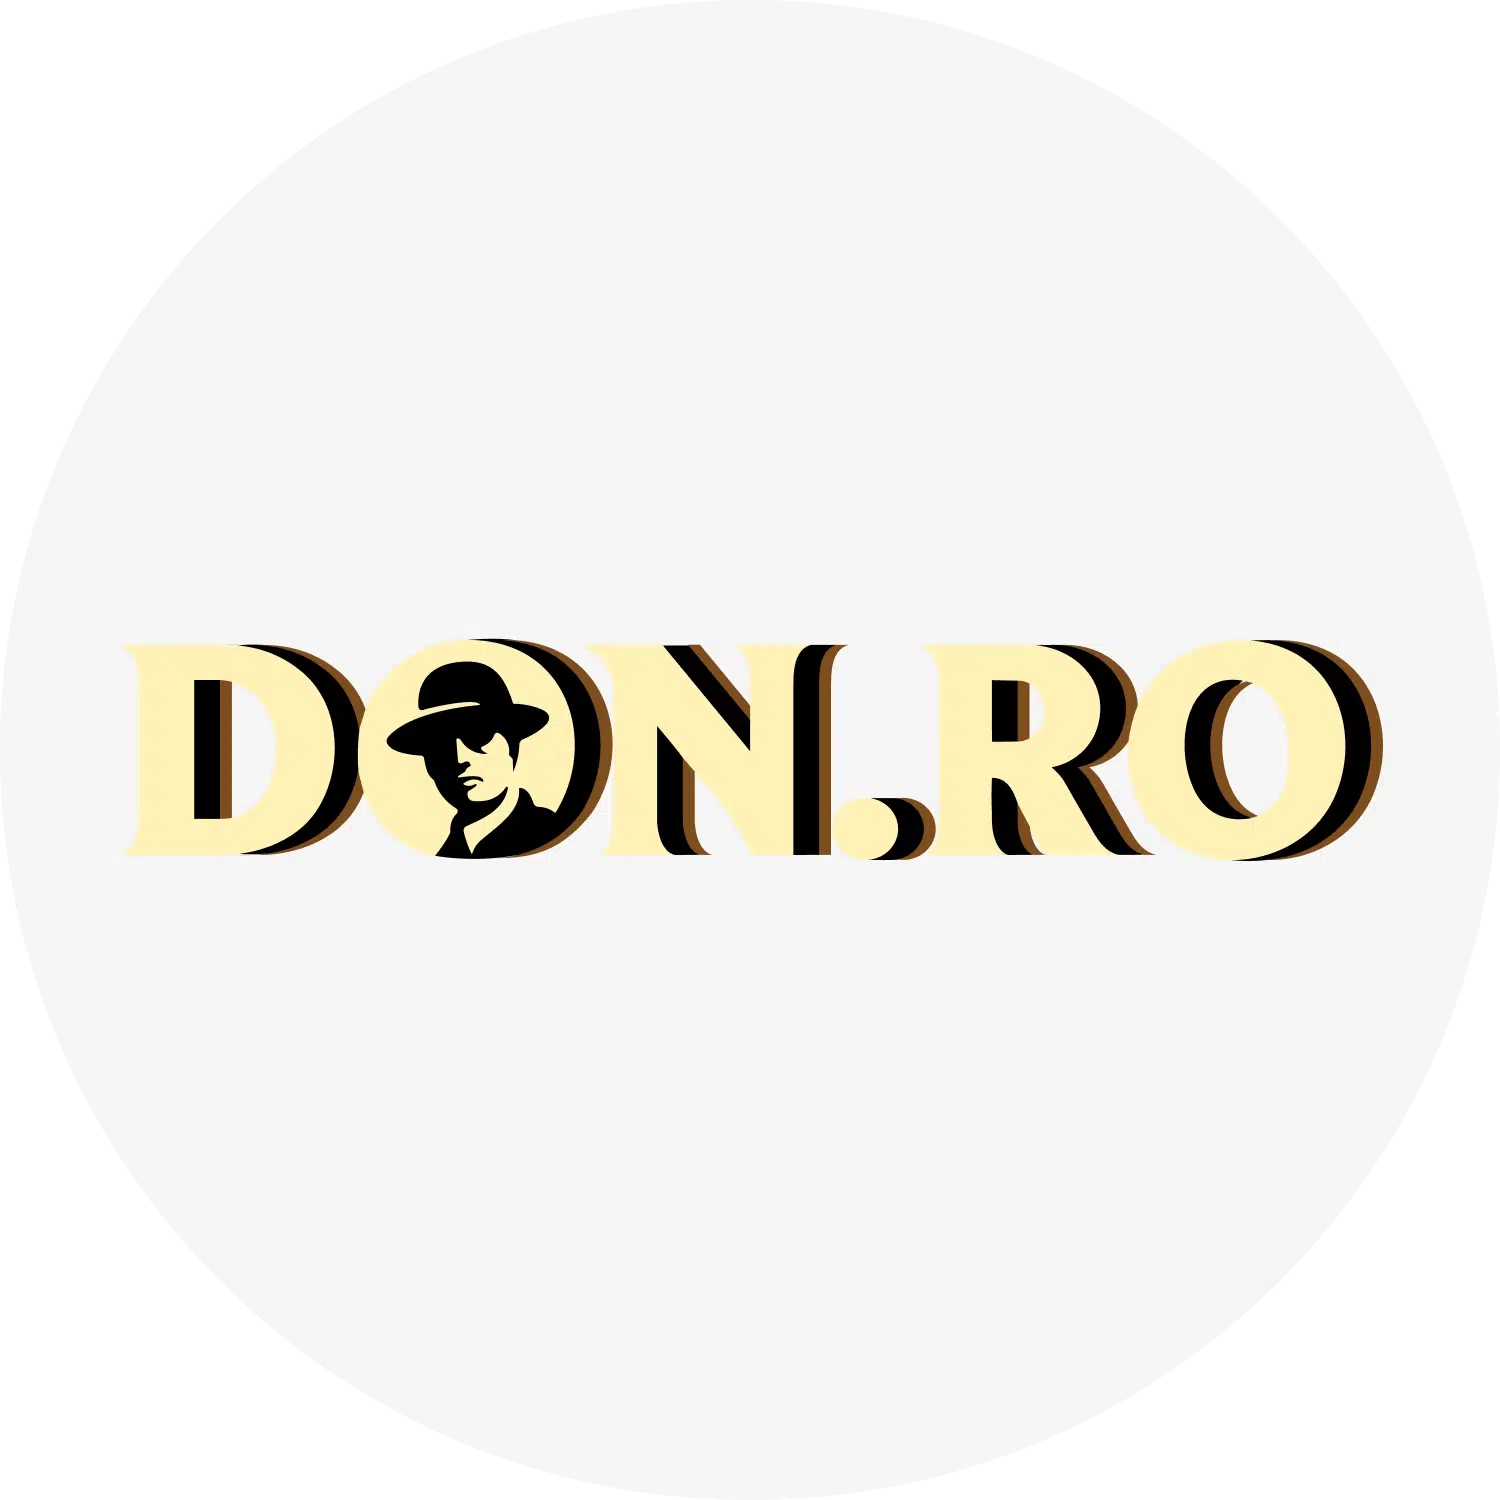 Don casino logo rotund 1500x1500 gri